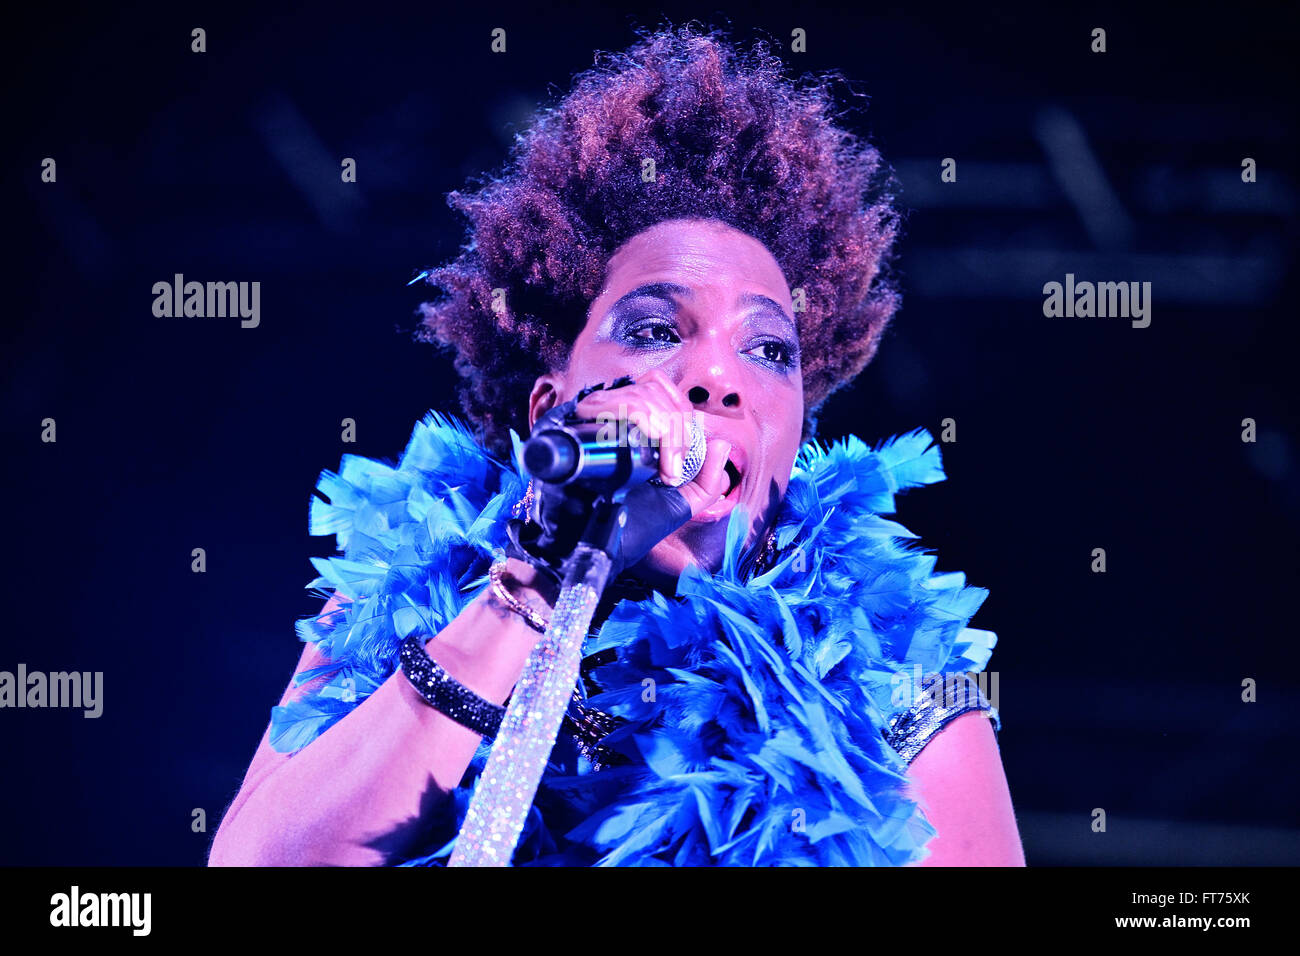 BILBAO, Spanien - 31 Okt.: Macy Gray (Band) live-Performance beim Bime-Festival am 31. Oktober 2014 in Bilbao, Spanien. Stockfoto